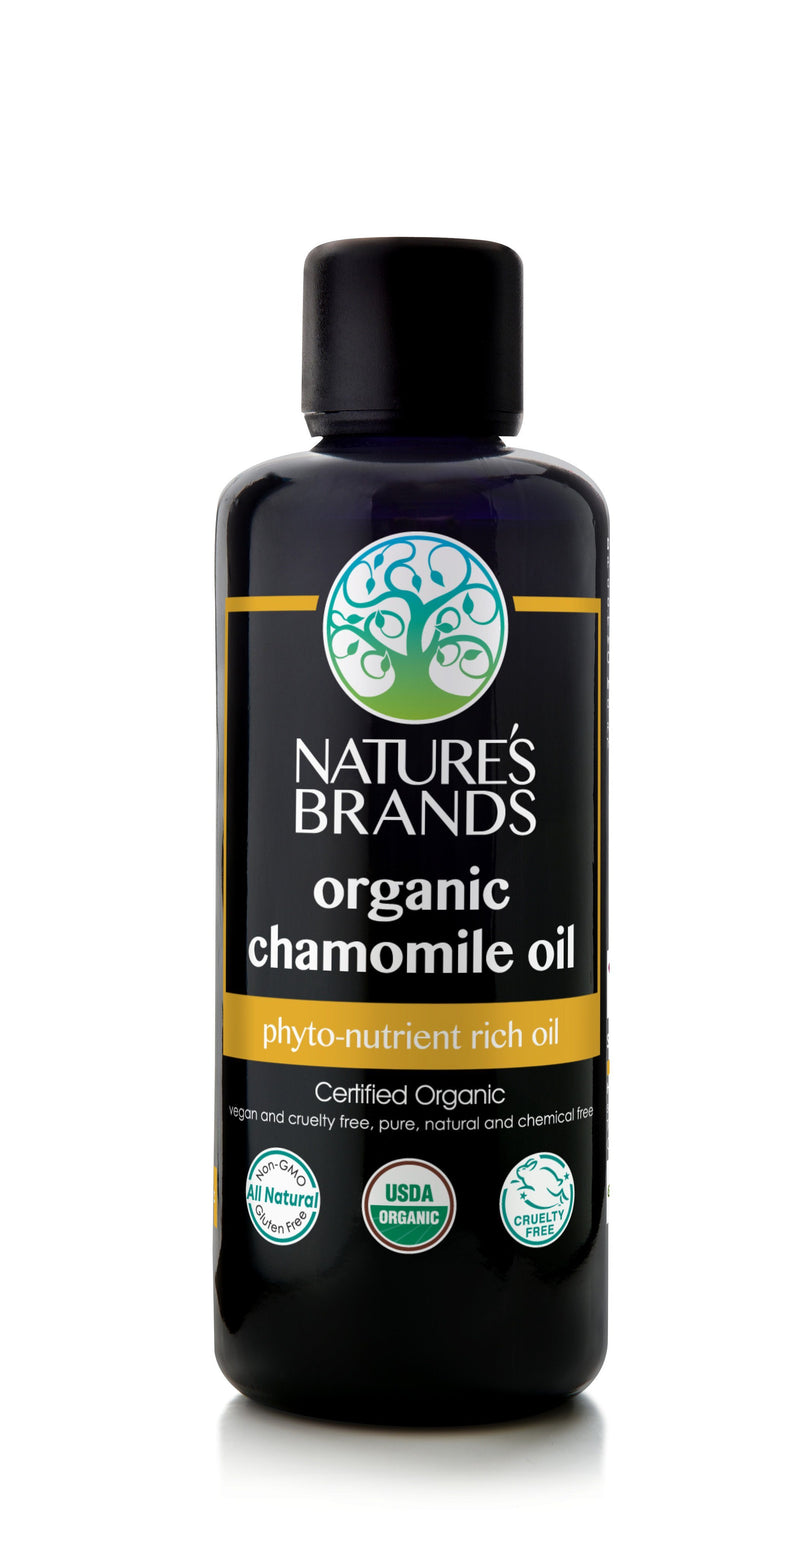 Herbal Choice Mari Organic Chamomile Oil - Herbal Choice Mari Organic Chamomile Oil - Herbal Choice Mari Organic Chamomile Oil